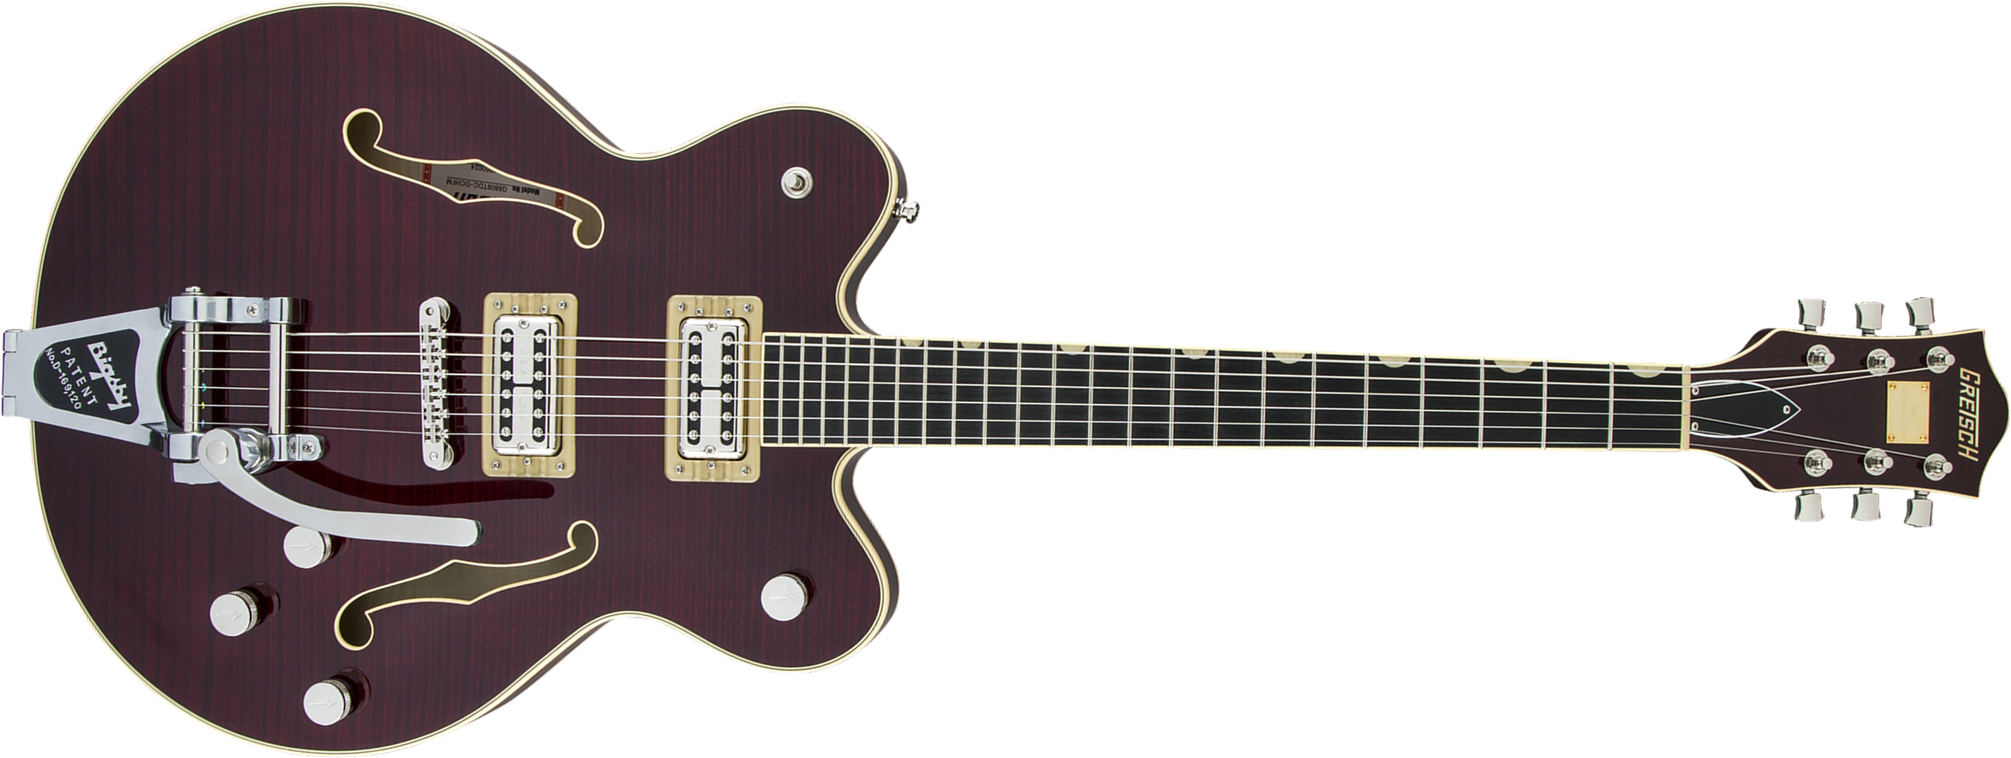 Gretsch G6609tfm Broadkaster Center Bloc Dc Players Edition Pro Jap Bigsby Eb - Dark Cherry Stain - Semi hollow elektriche gitaar - Main picture